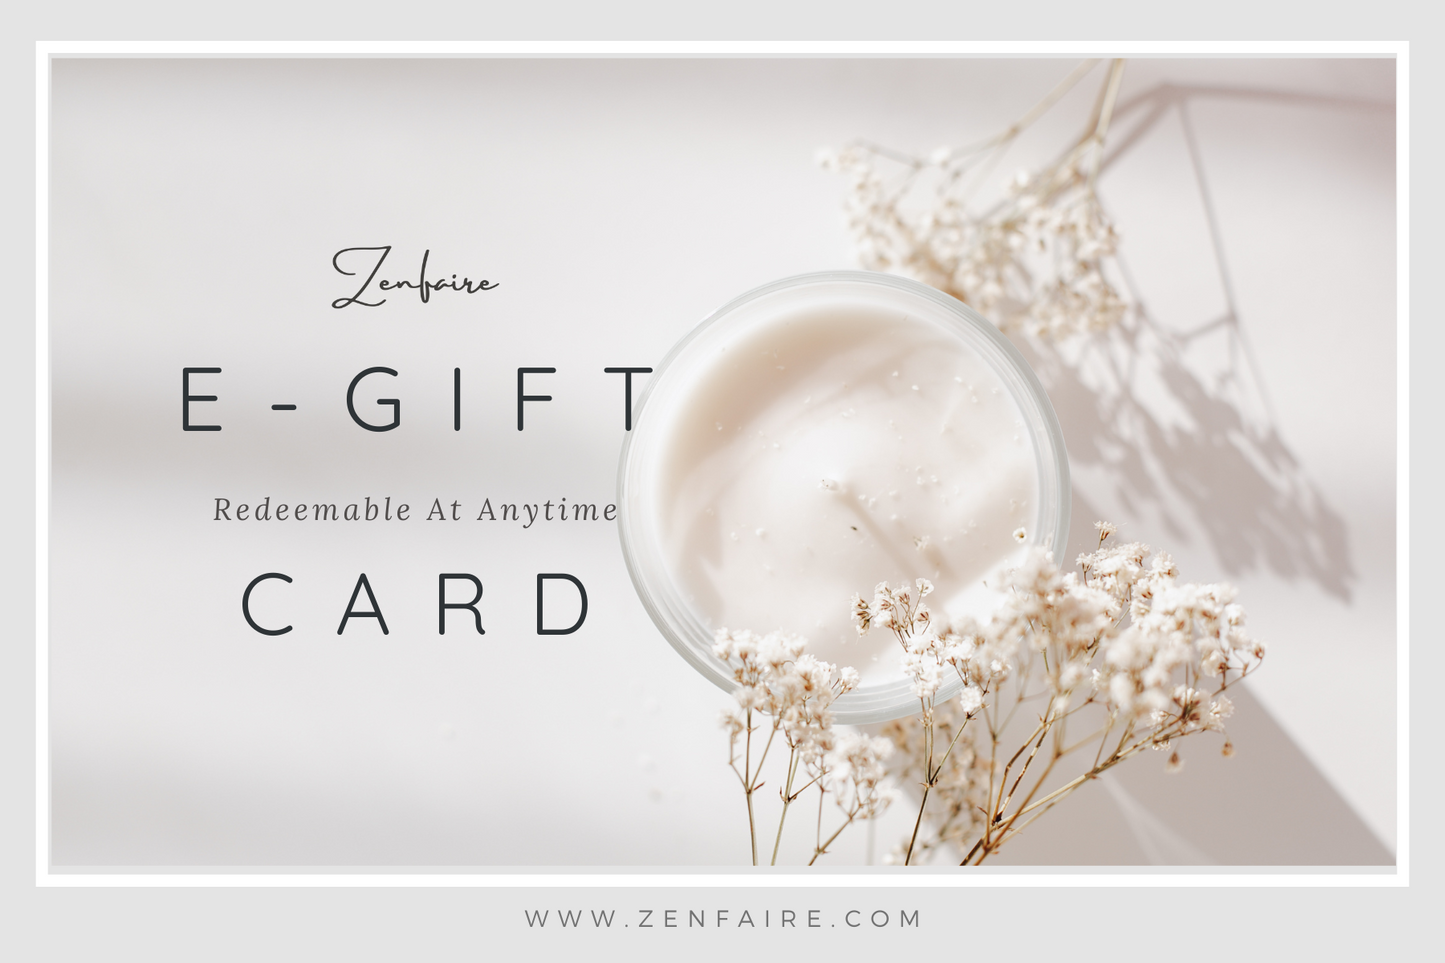 Zenfaire E-Gift Card